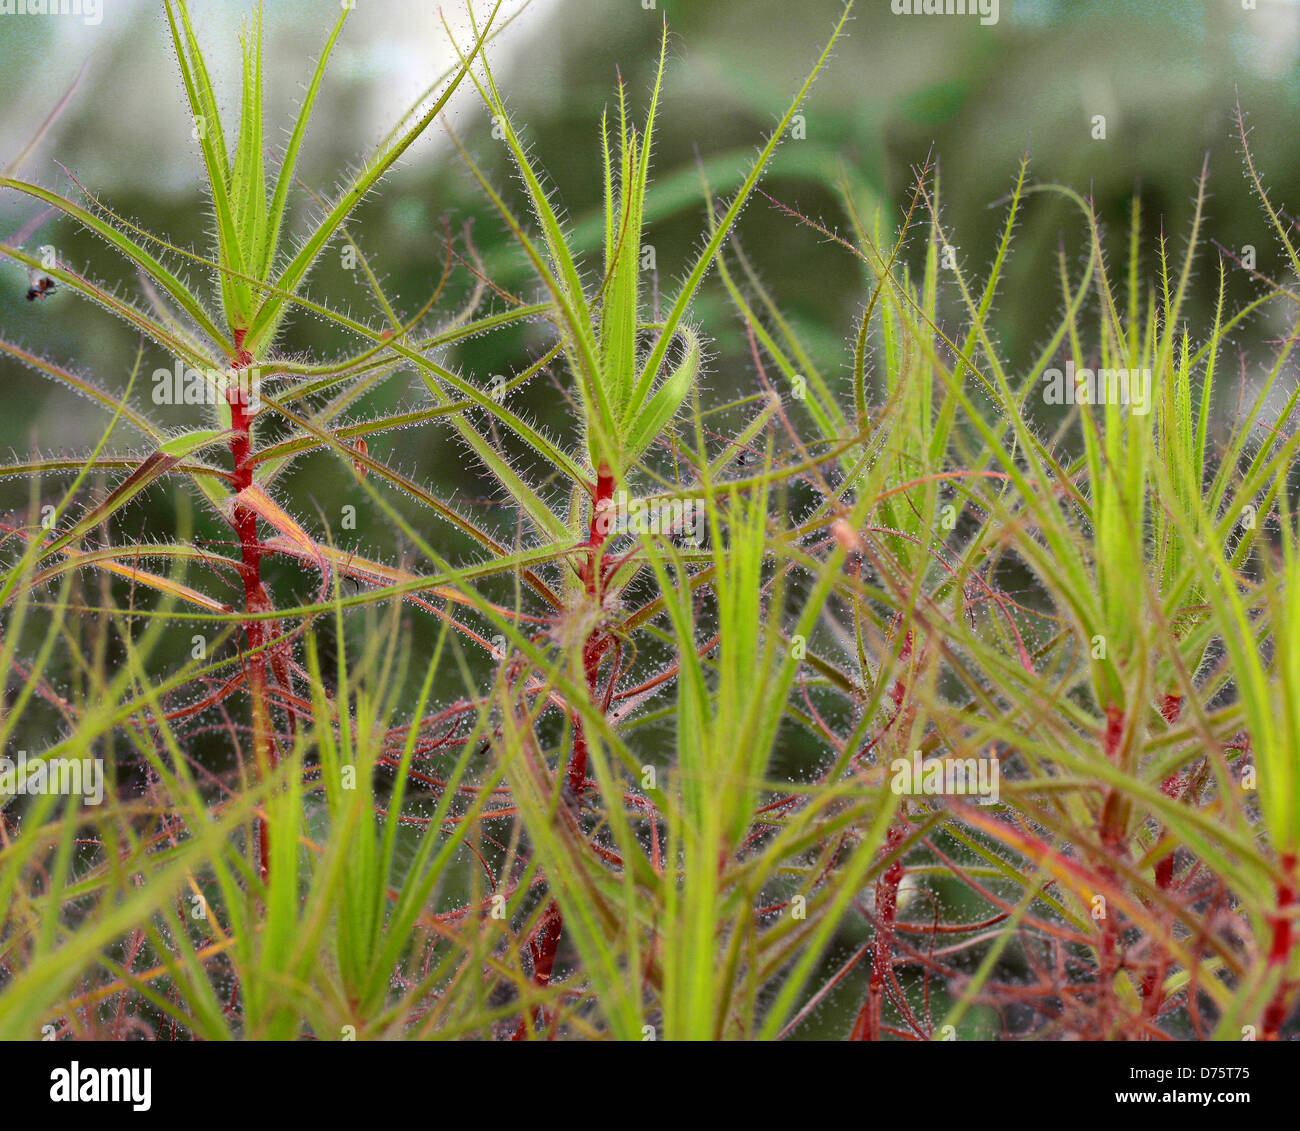 Flycatcher Bush, Roridula gorgonias, Roridulaceae. South Africa. Syn. R. brachysepala, R. crinita, R. dentata, R. muscicapa. Stock Photo